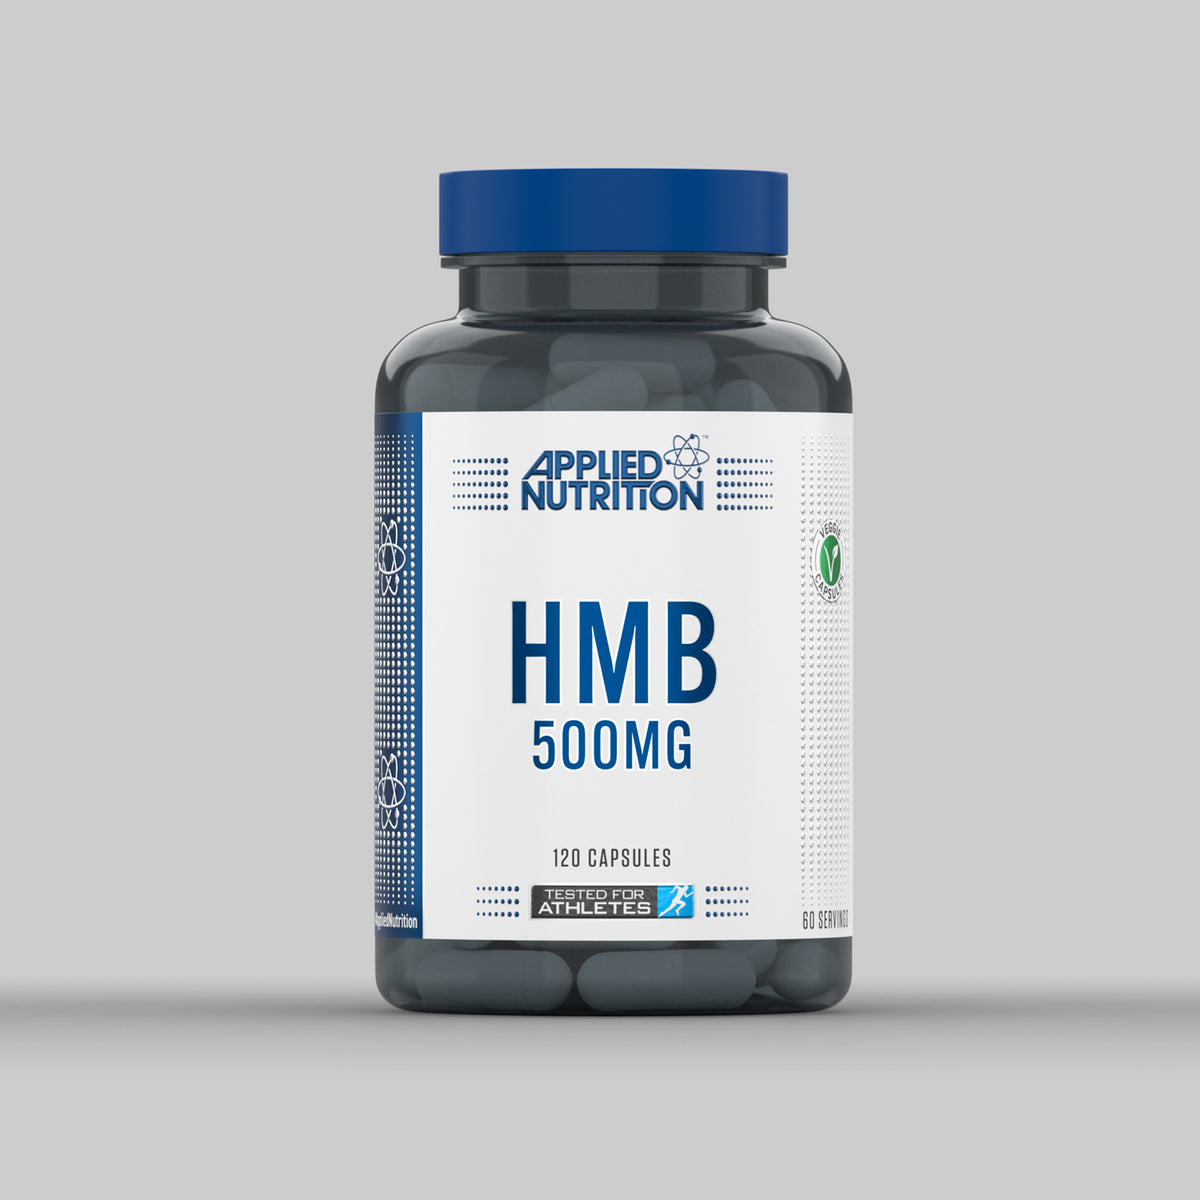 hmb-500mg-capsules-applied-nutrition-ltd